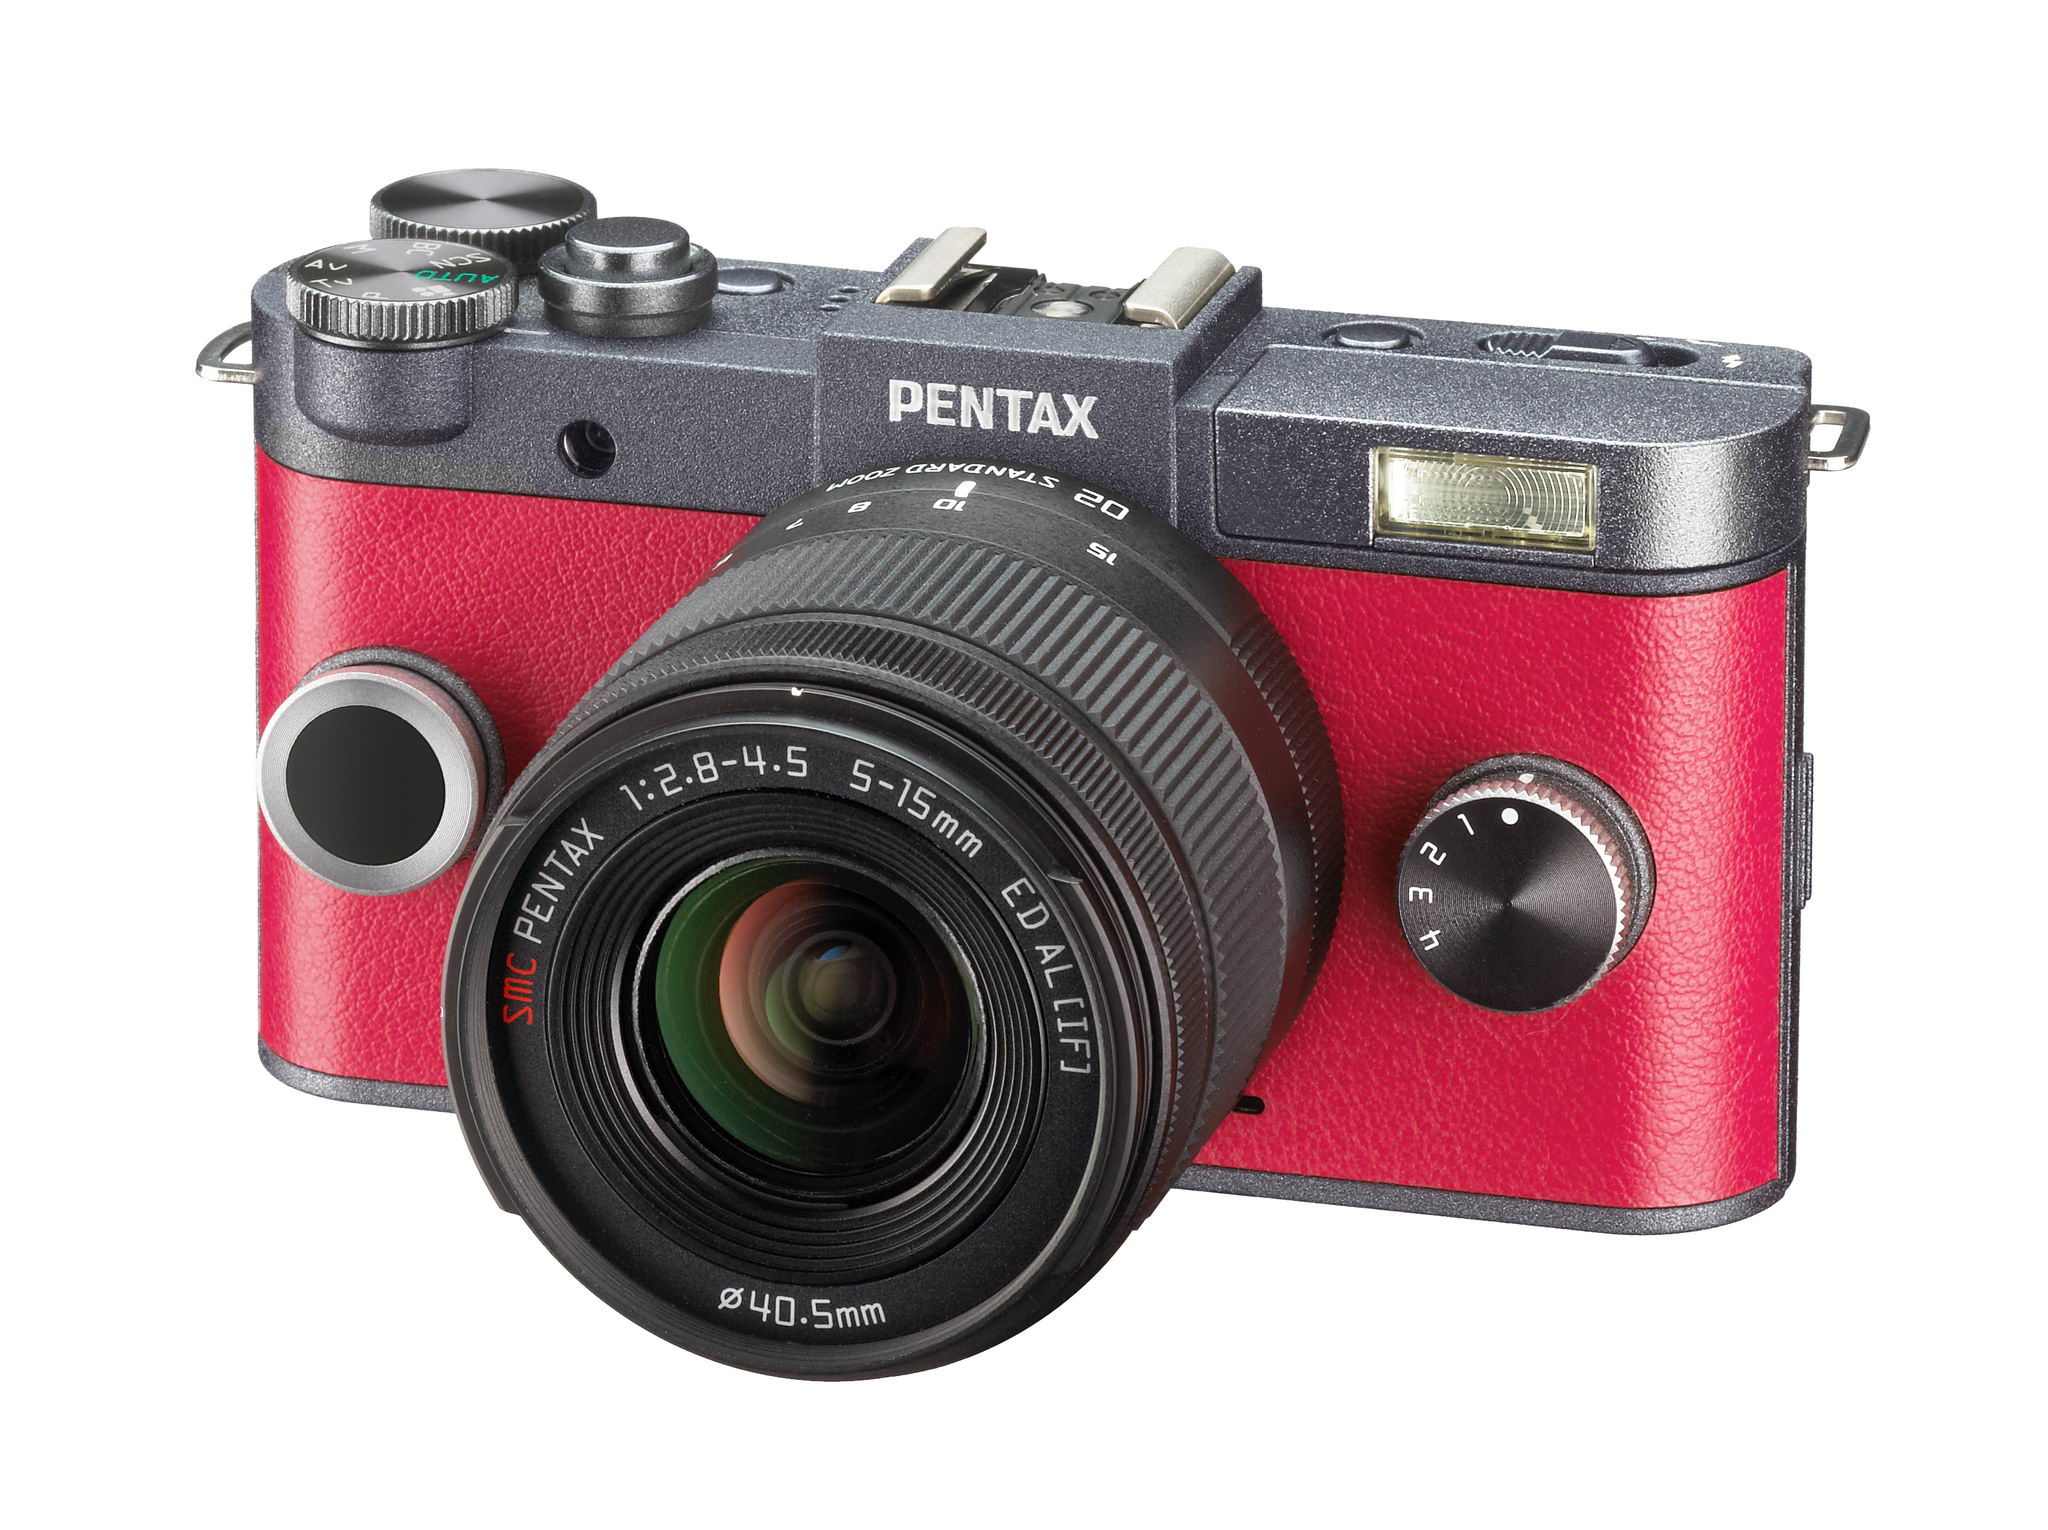 PENTAX Q-S1:A minimum-sized, lens-interchangeable digital camera